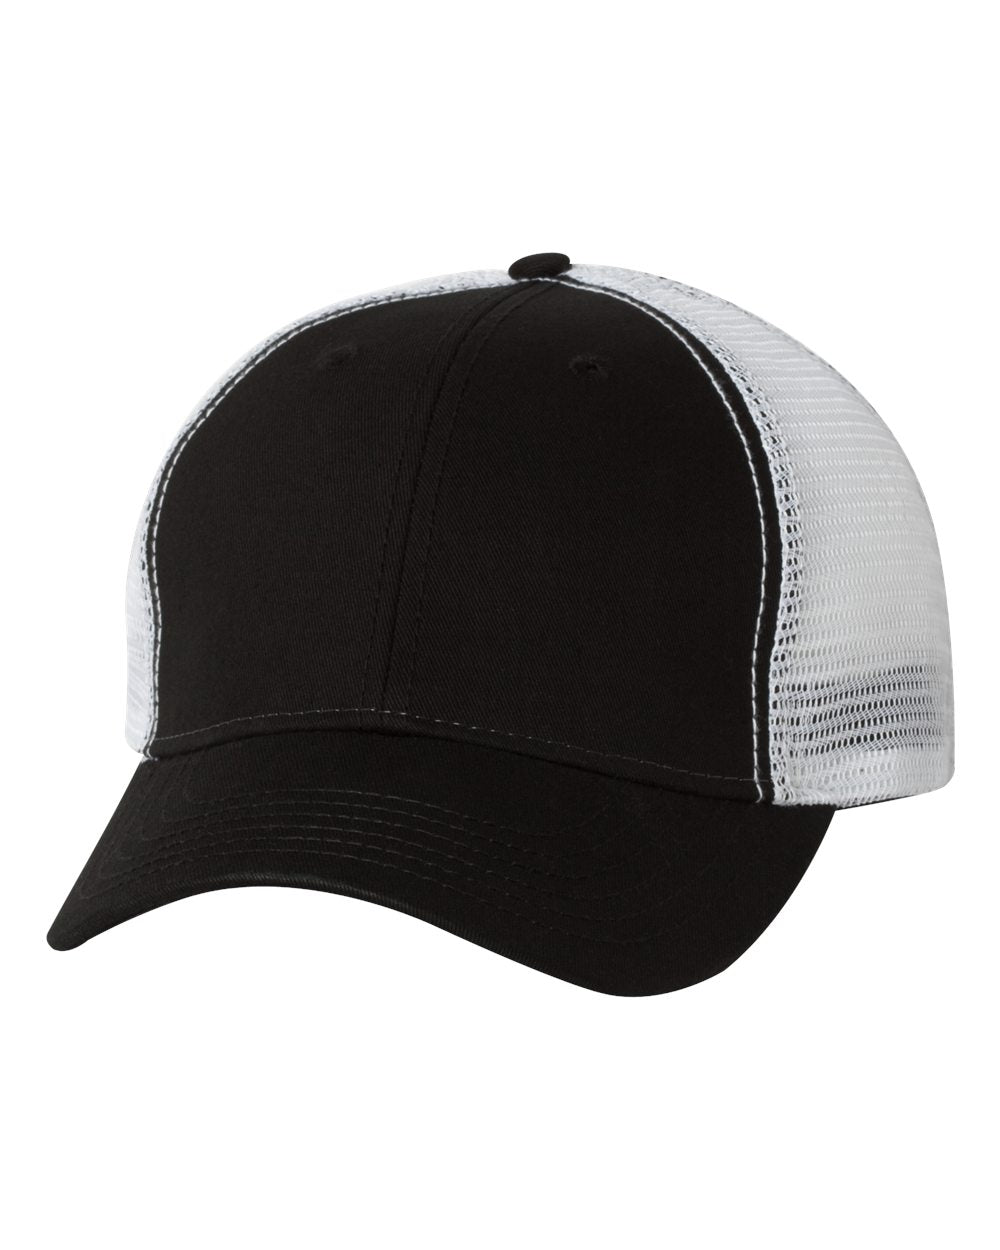 Staff Baseball Hat Embroidered Mesh Trucker Cap (Black & White)